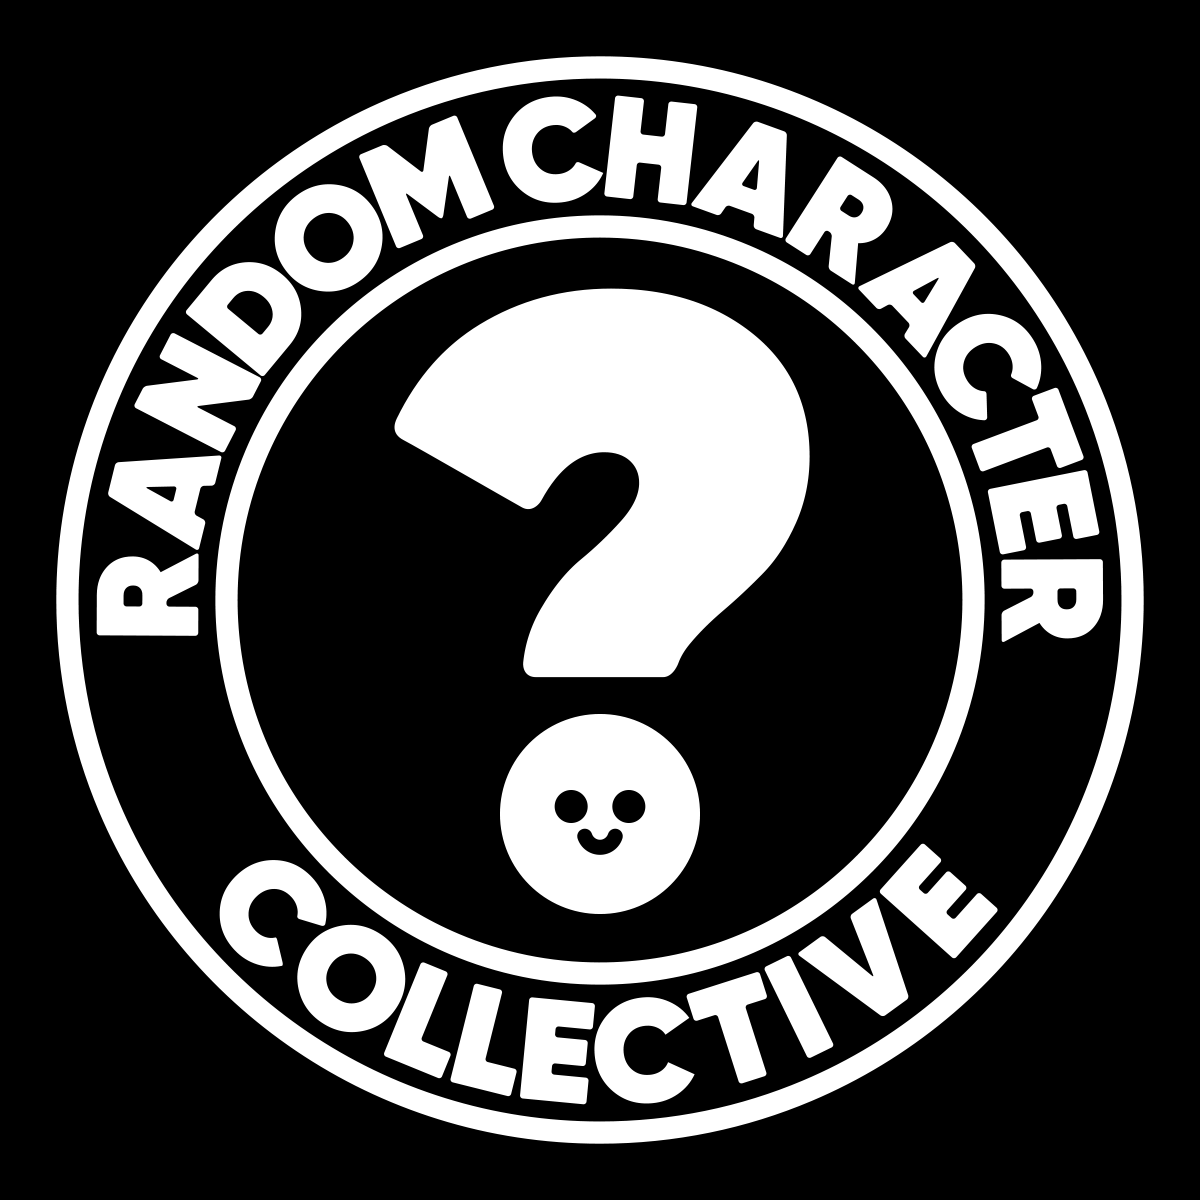 Random Character Collective